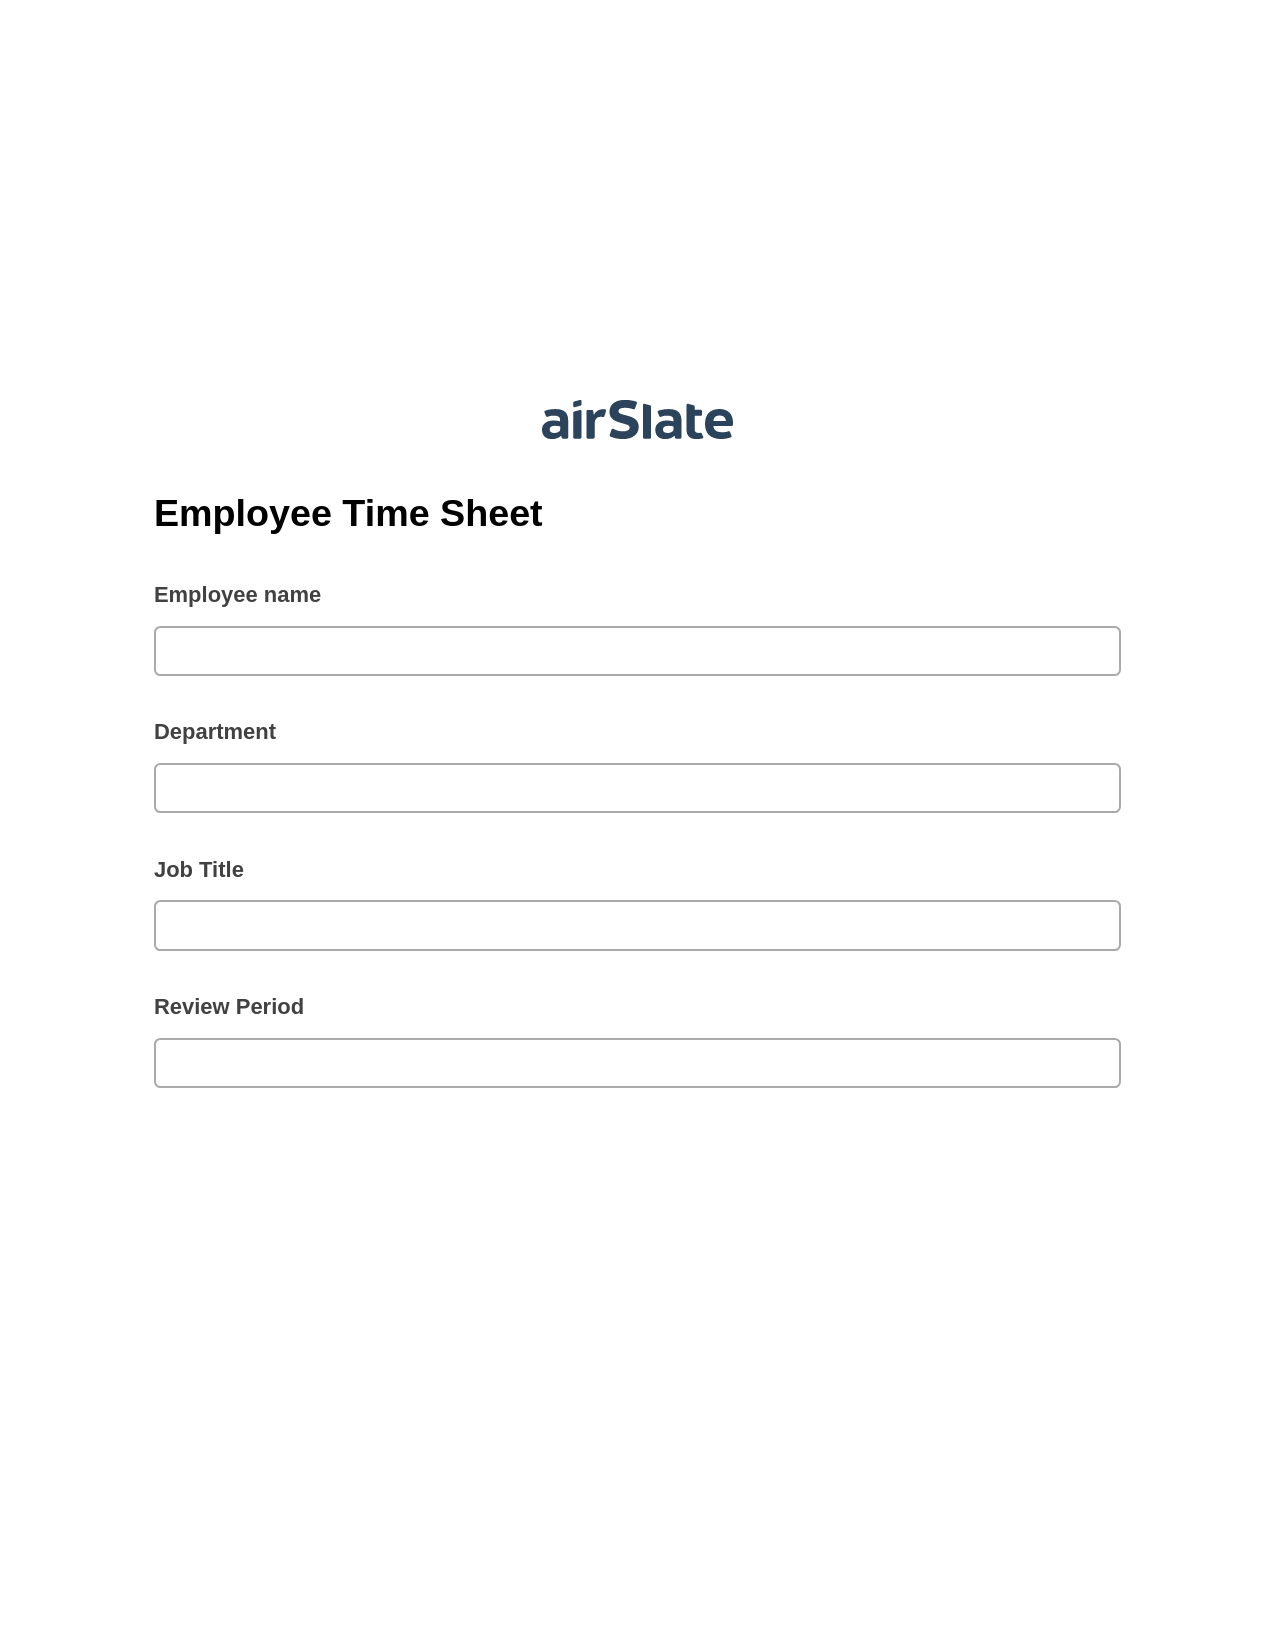 Multirole Employee Time Sheet Pre-fill Dropdowns from Google Sheet Bot, Update Audit Trail Bot, Export to Smartsheet